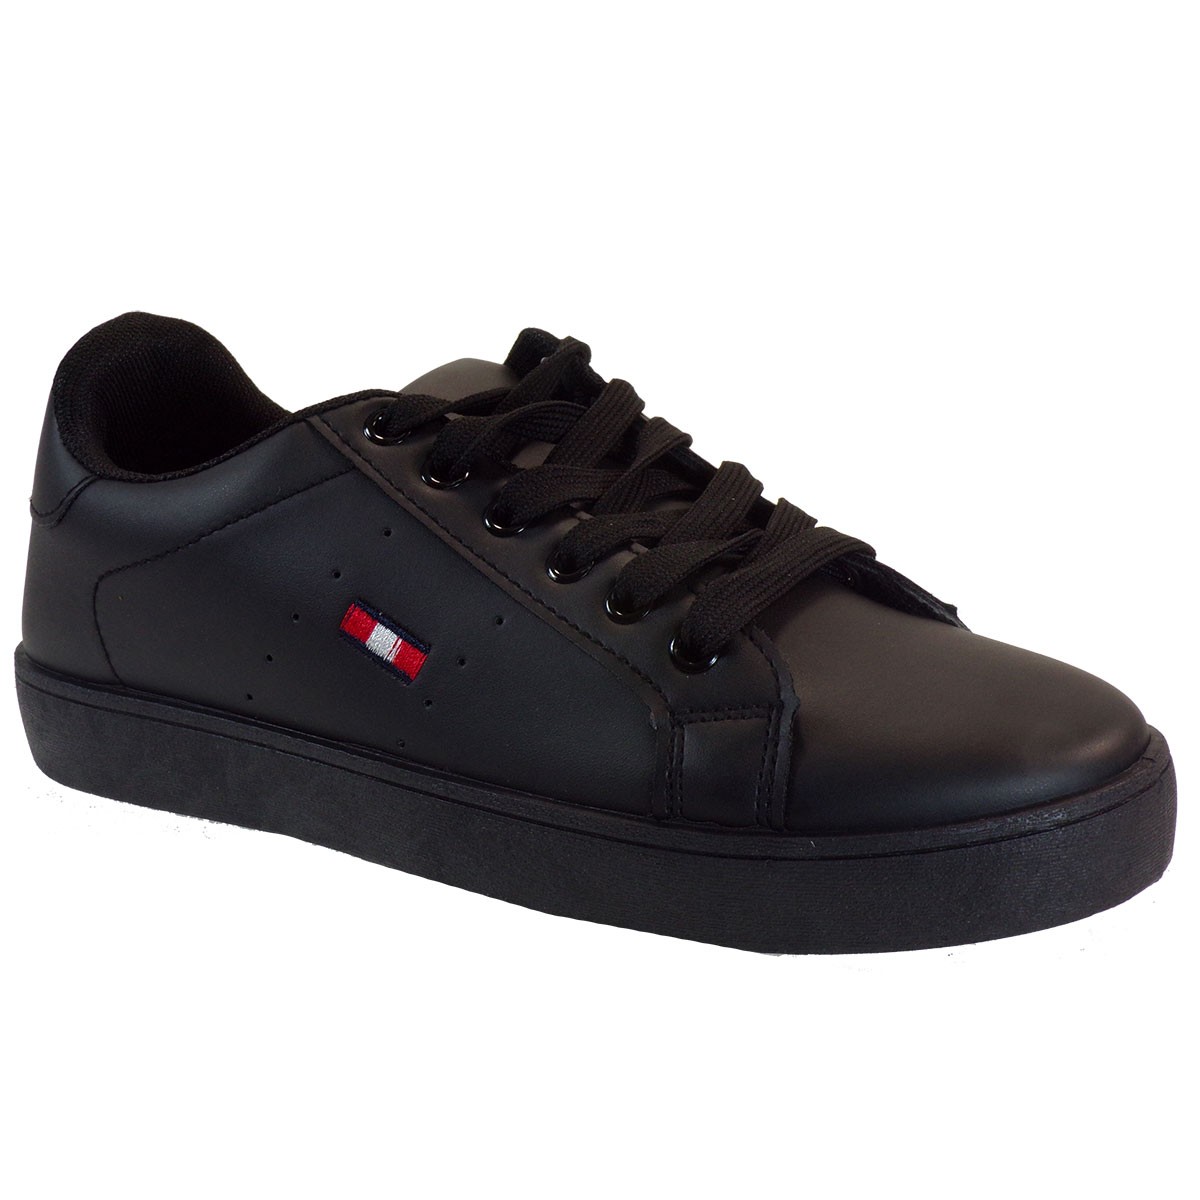 Bagiota Shoes Γυναικεία Παπούτσια Sneakers Αθλητικά Β159 Μαύρο 73990